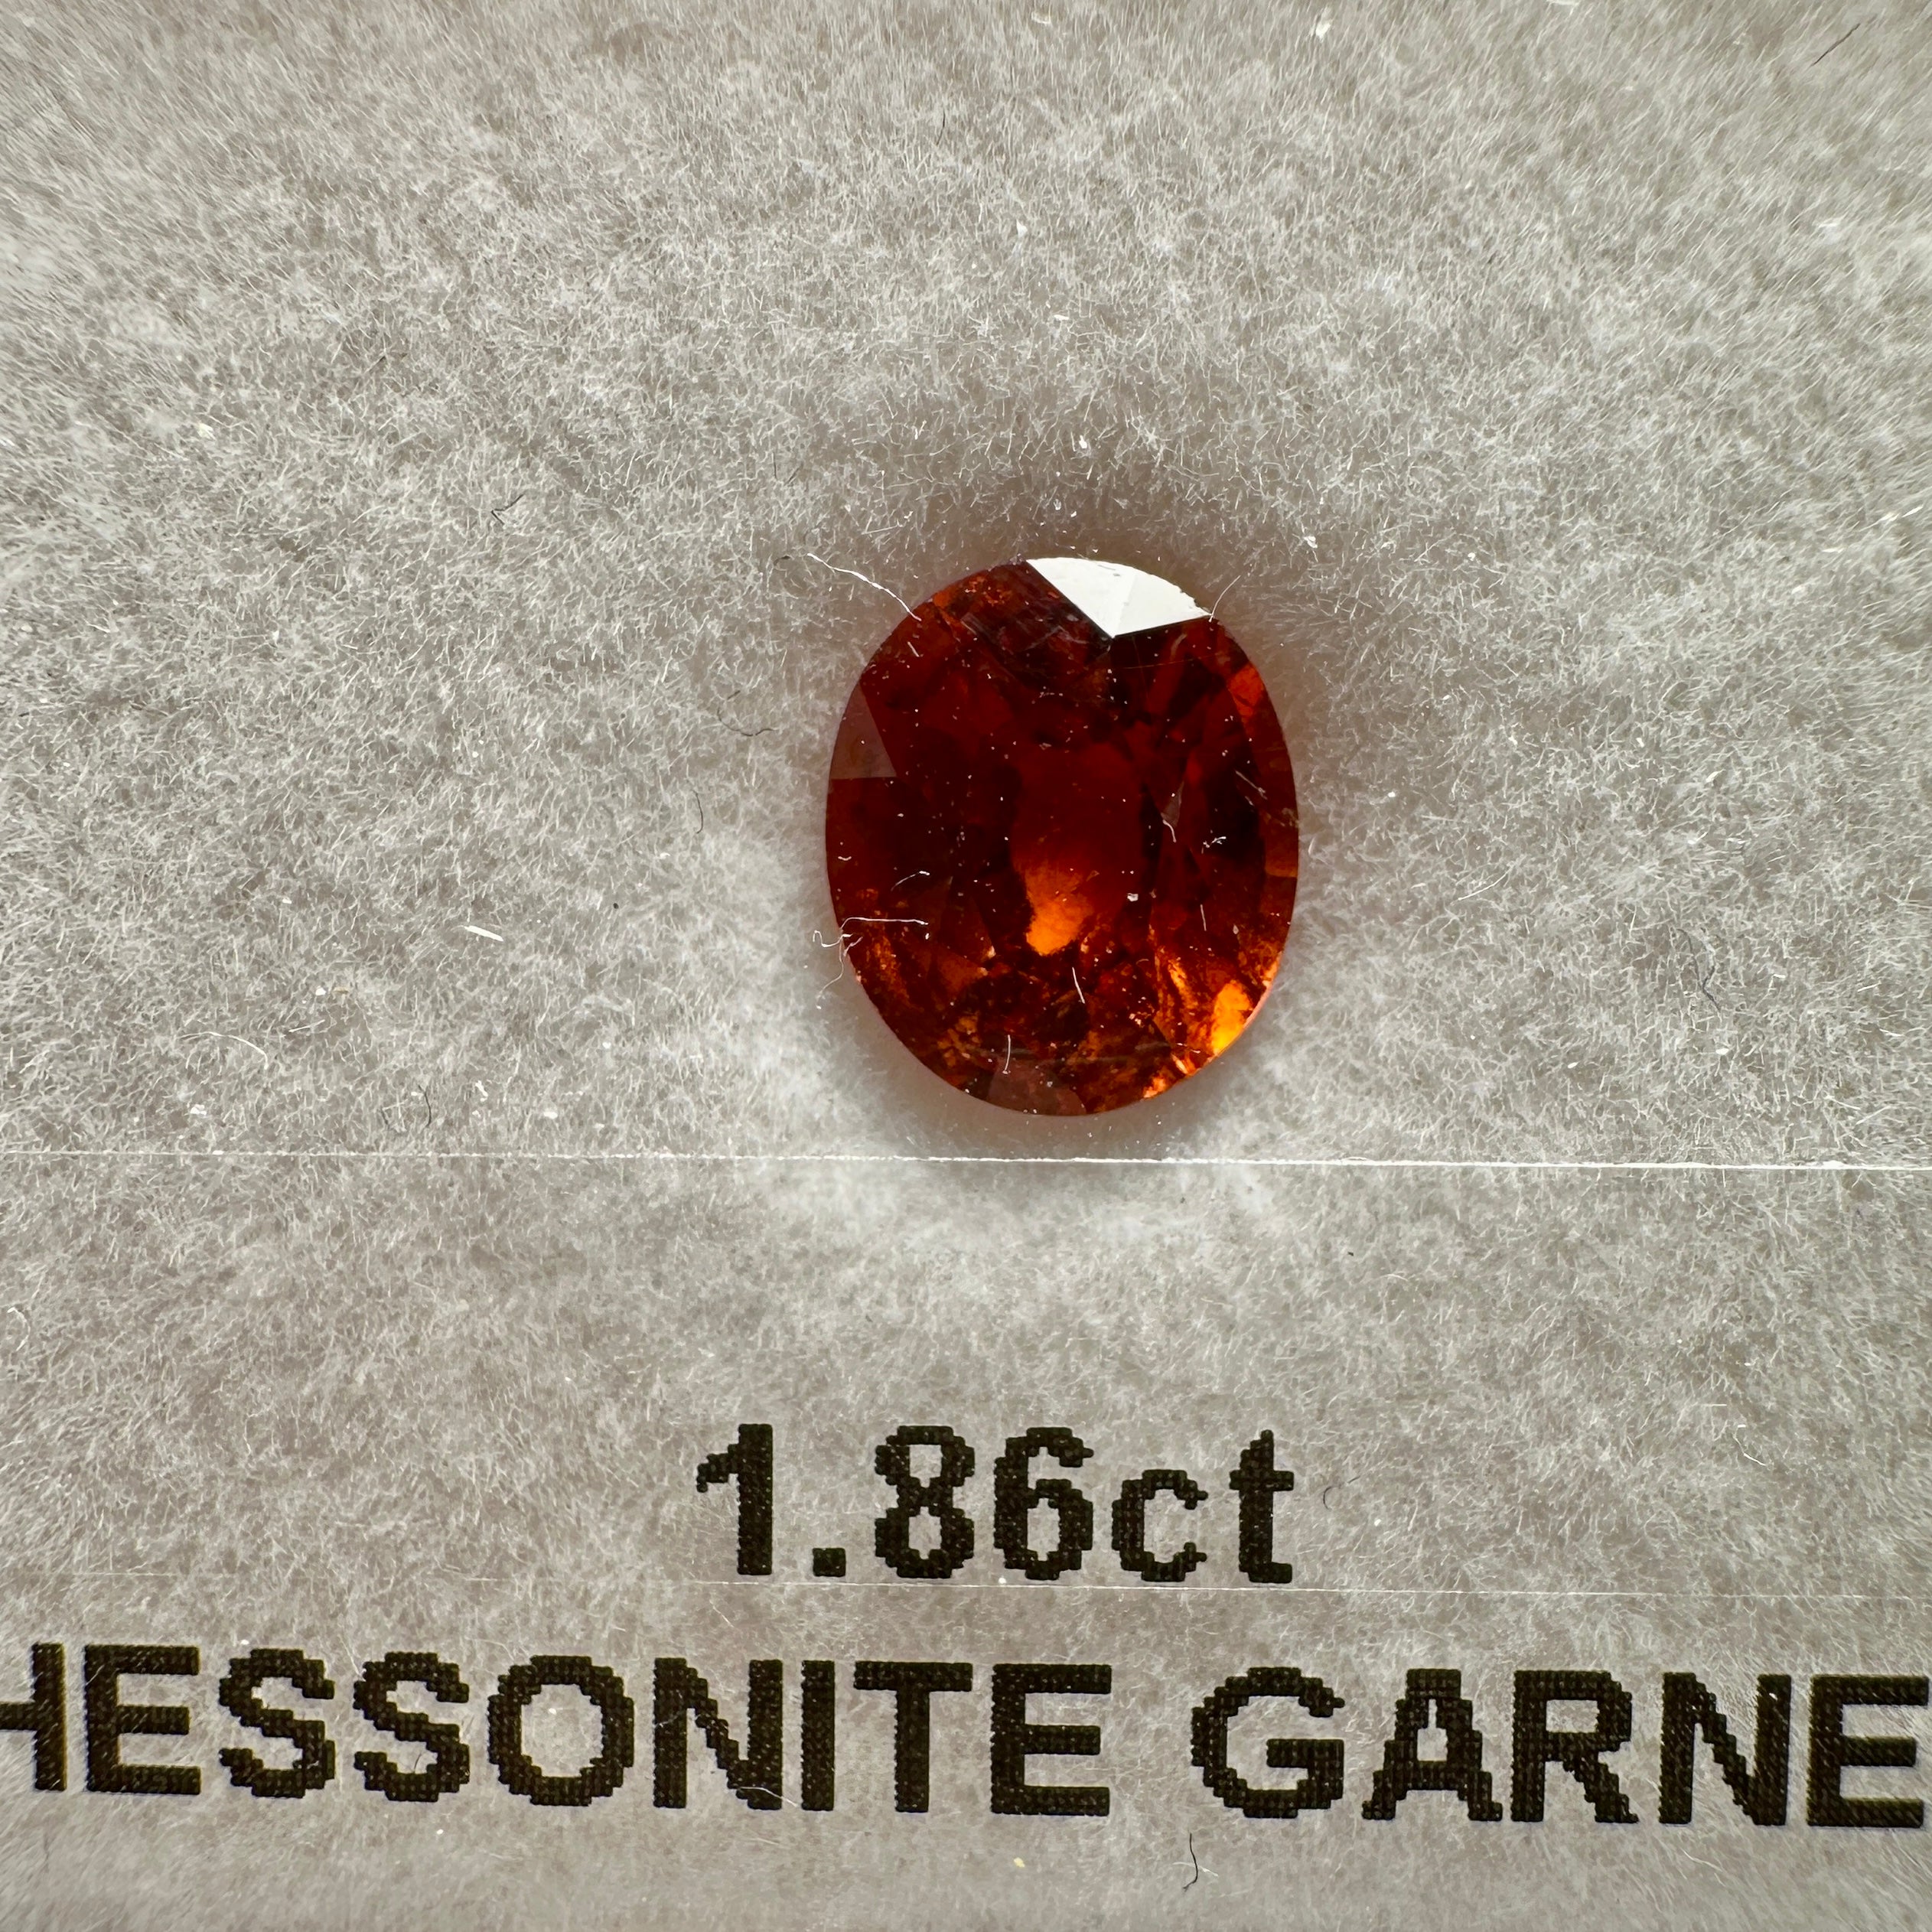 1.86ct Hessonite Garnet, Untreated Unheated, native cut